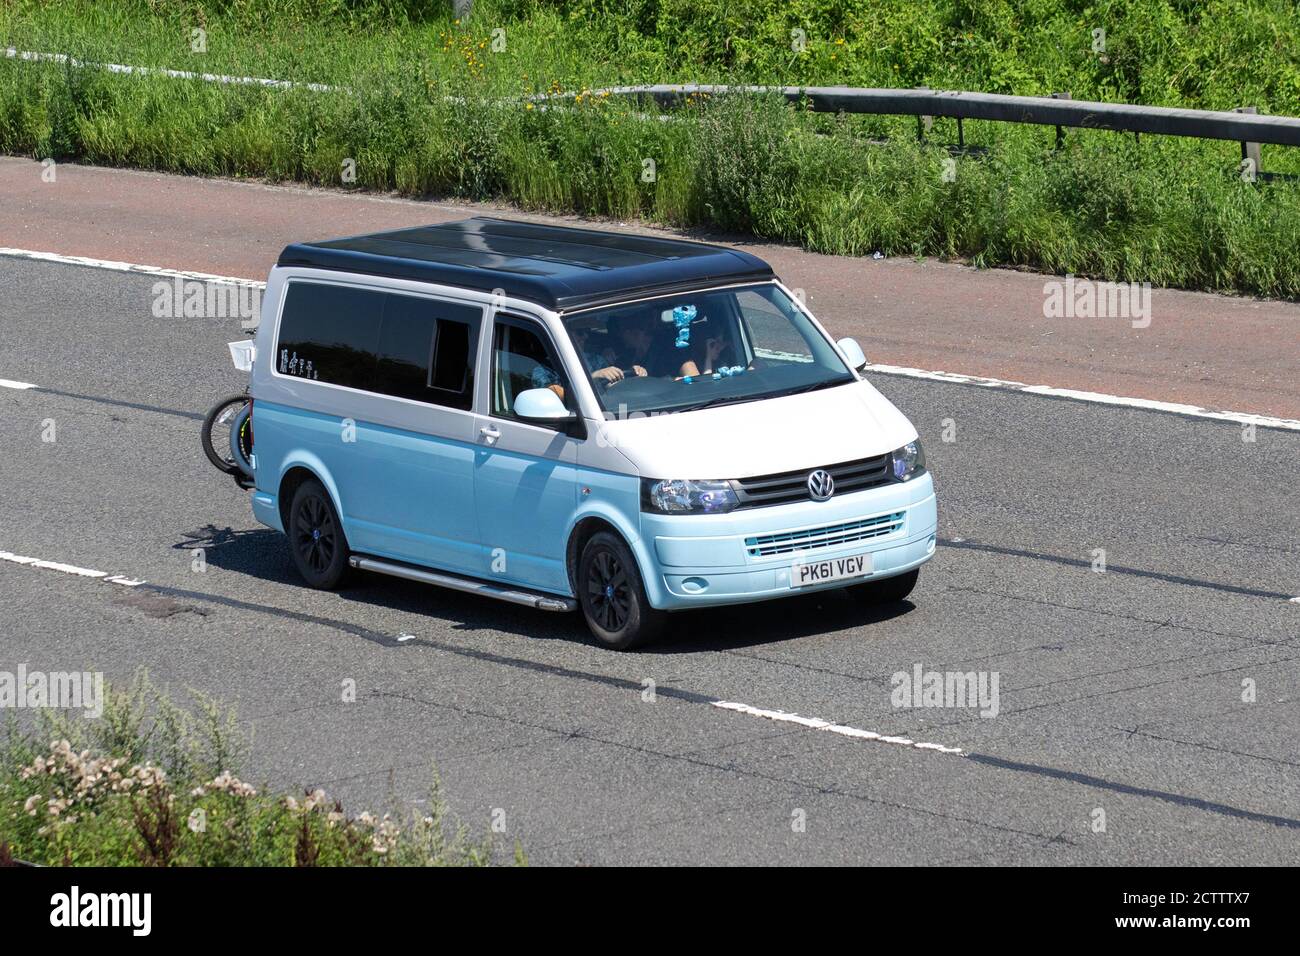 Volkswagen Van Journey High Resolution Stock Photography and Images - Alamy